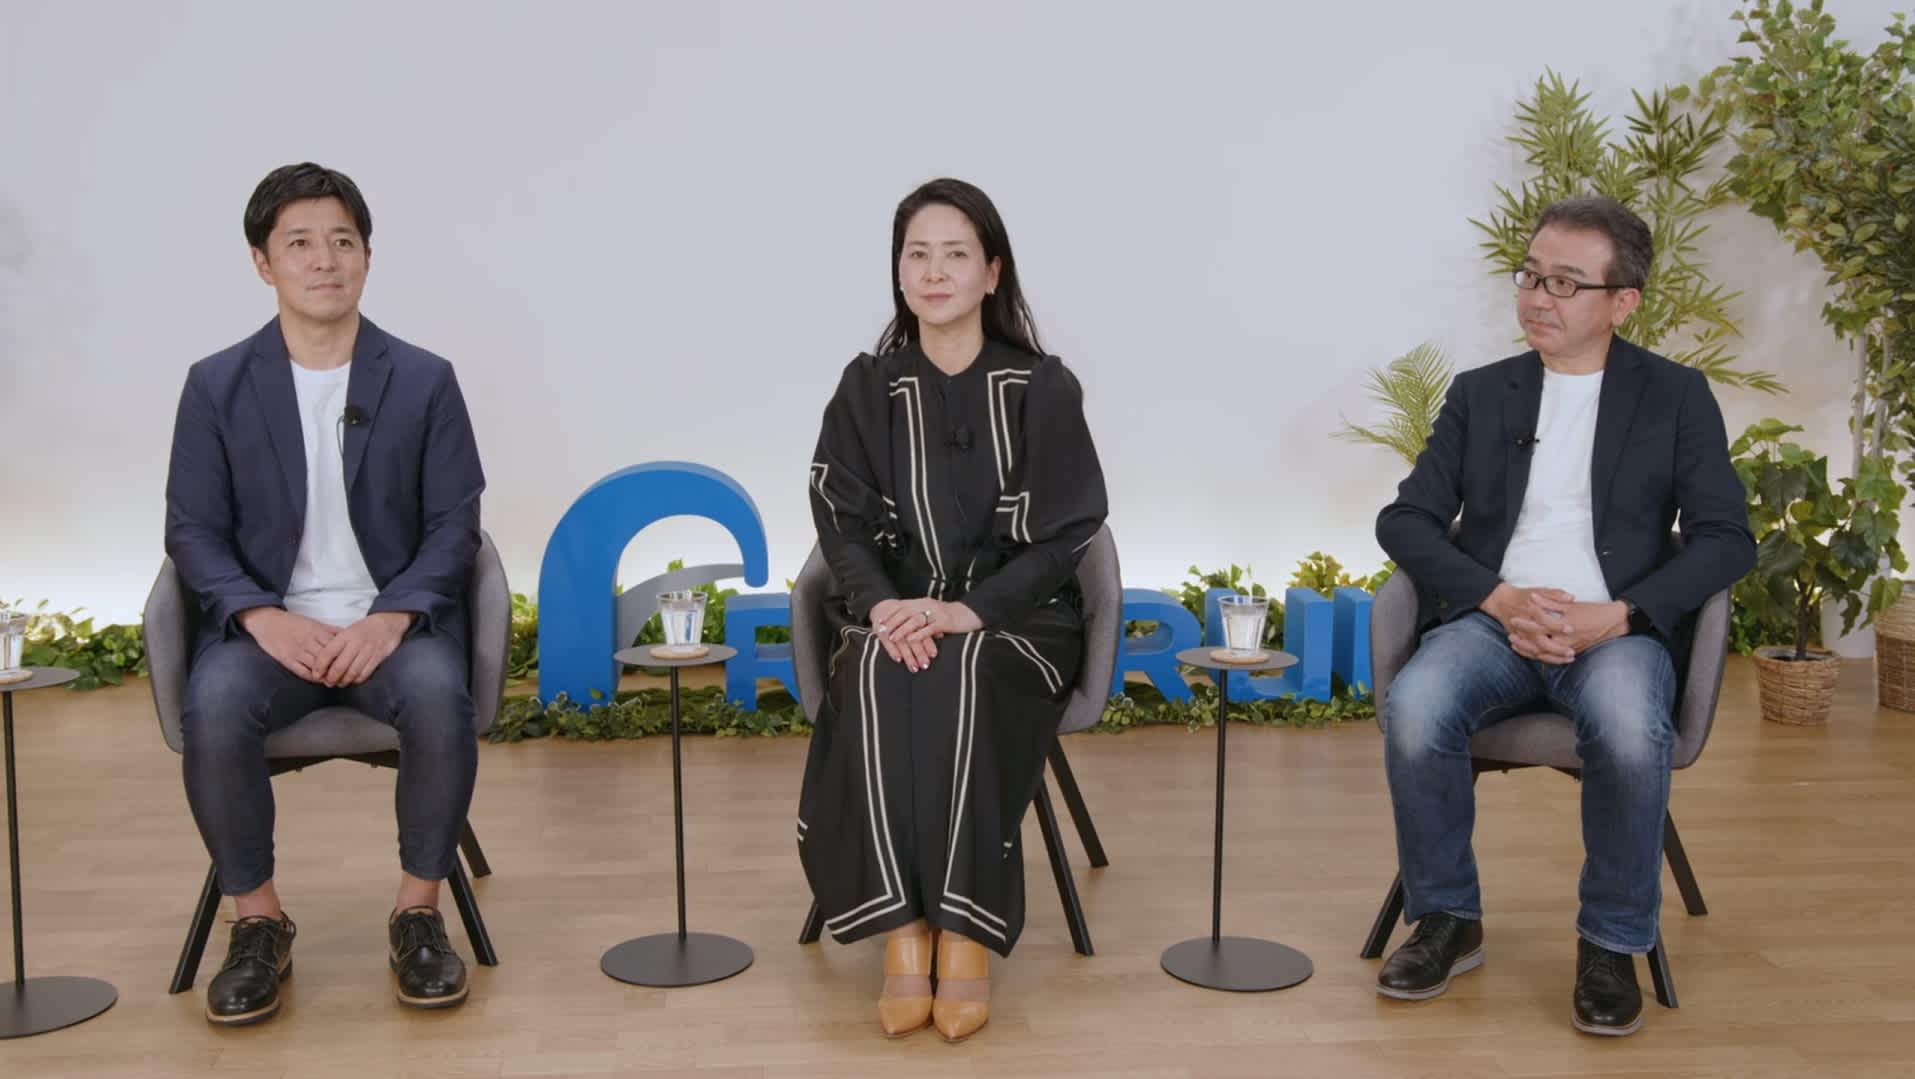 Recruit’s Yoshihiro Kitamura, Mio Kashiwamura, and Ken Asano at the fireside chat